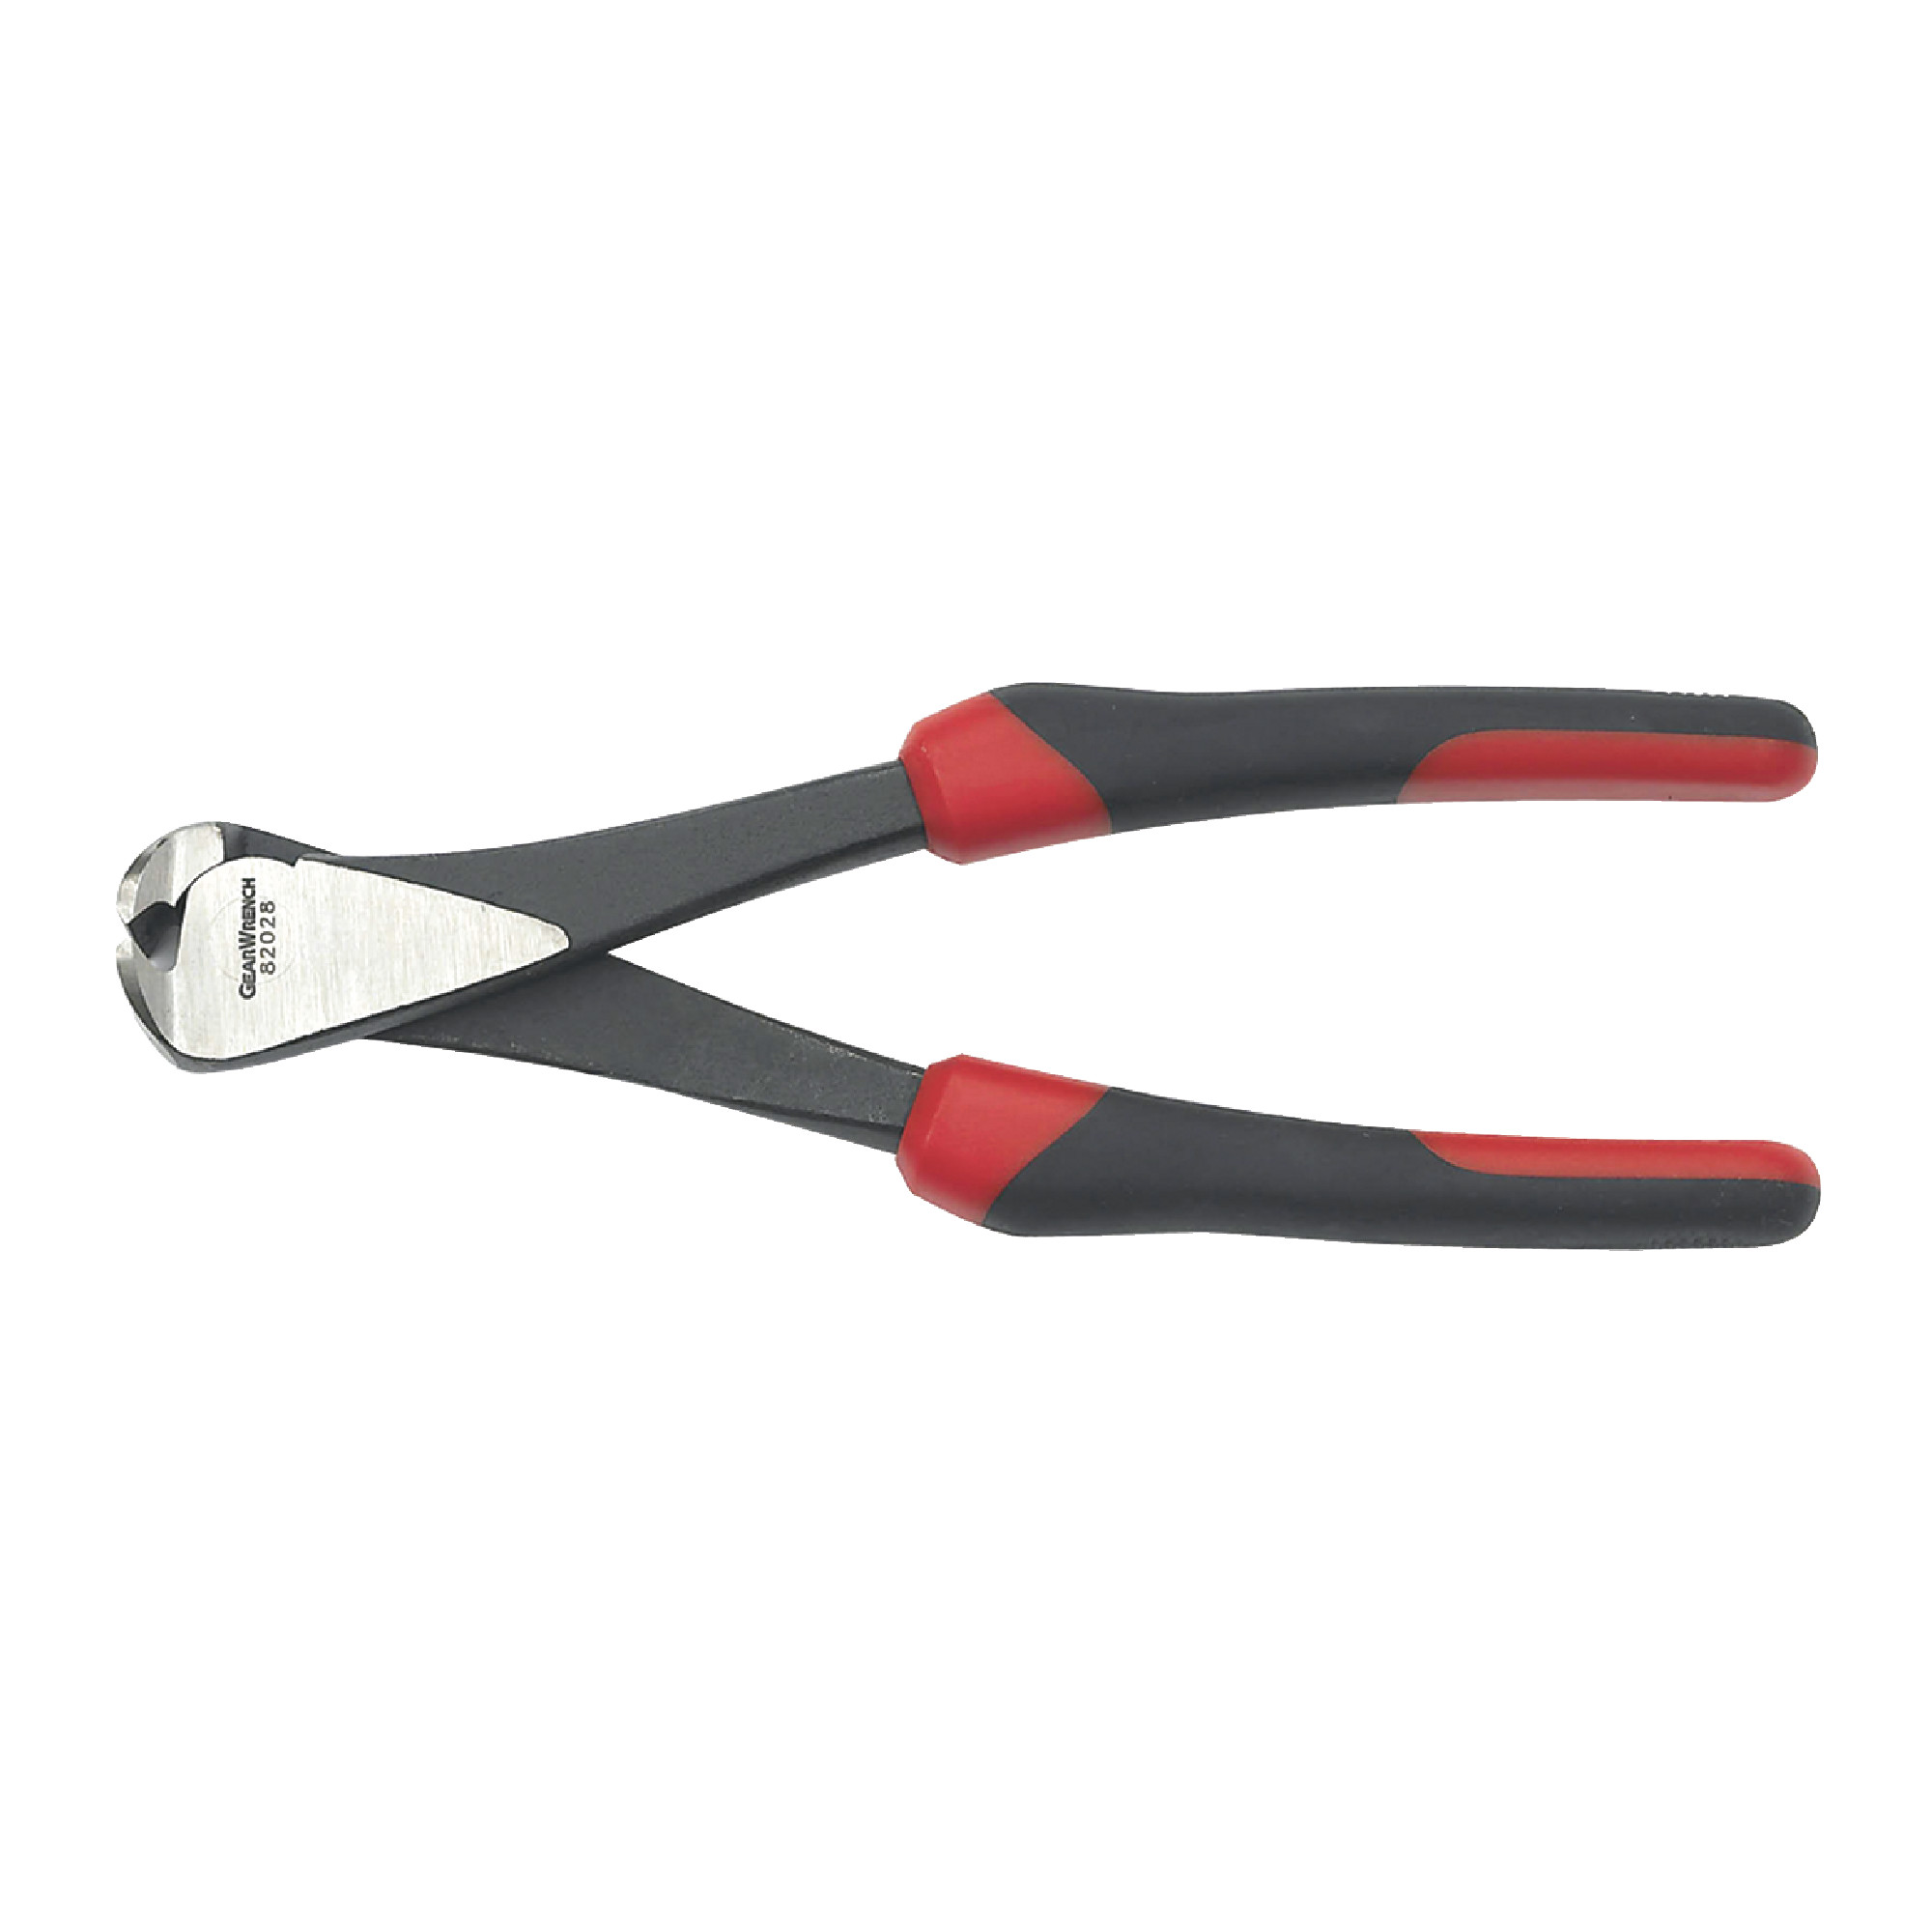 8" End Cutting Nipper Pliers